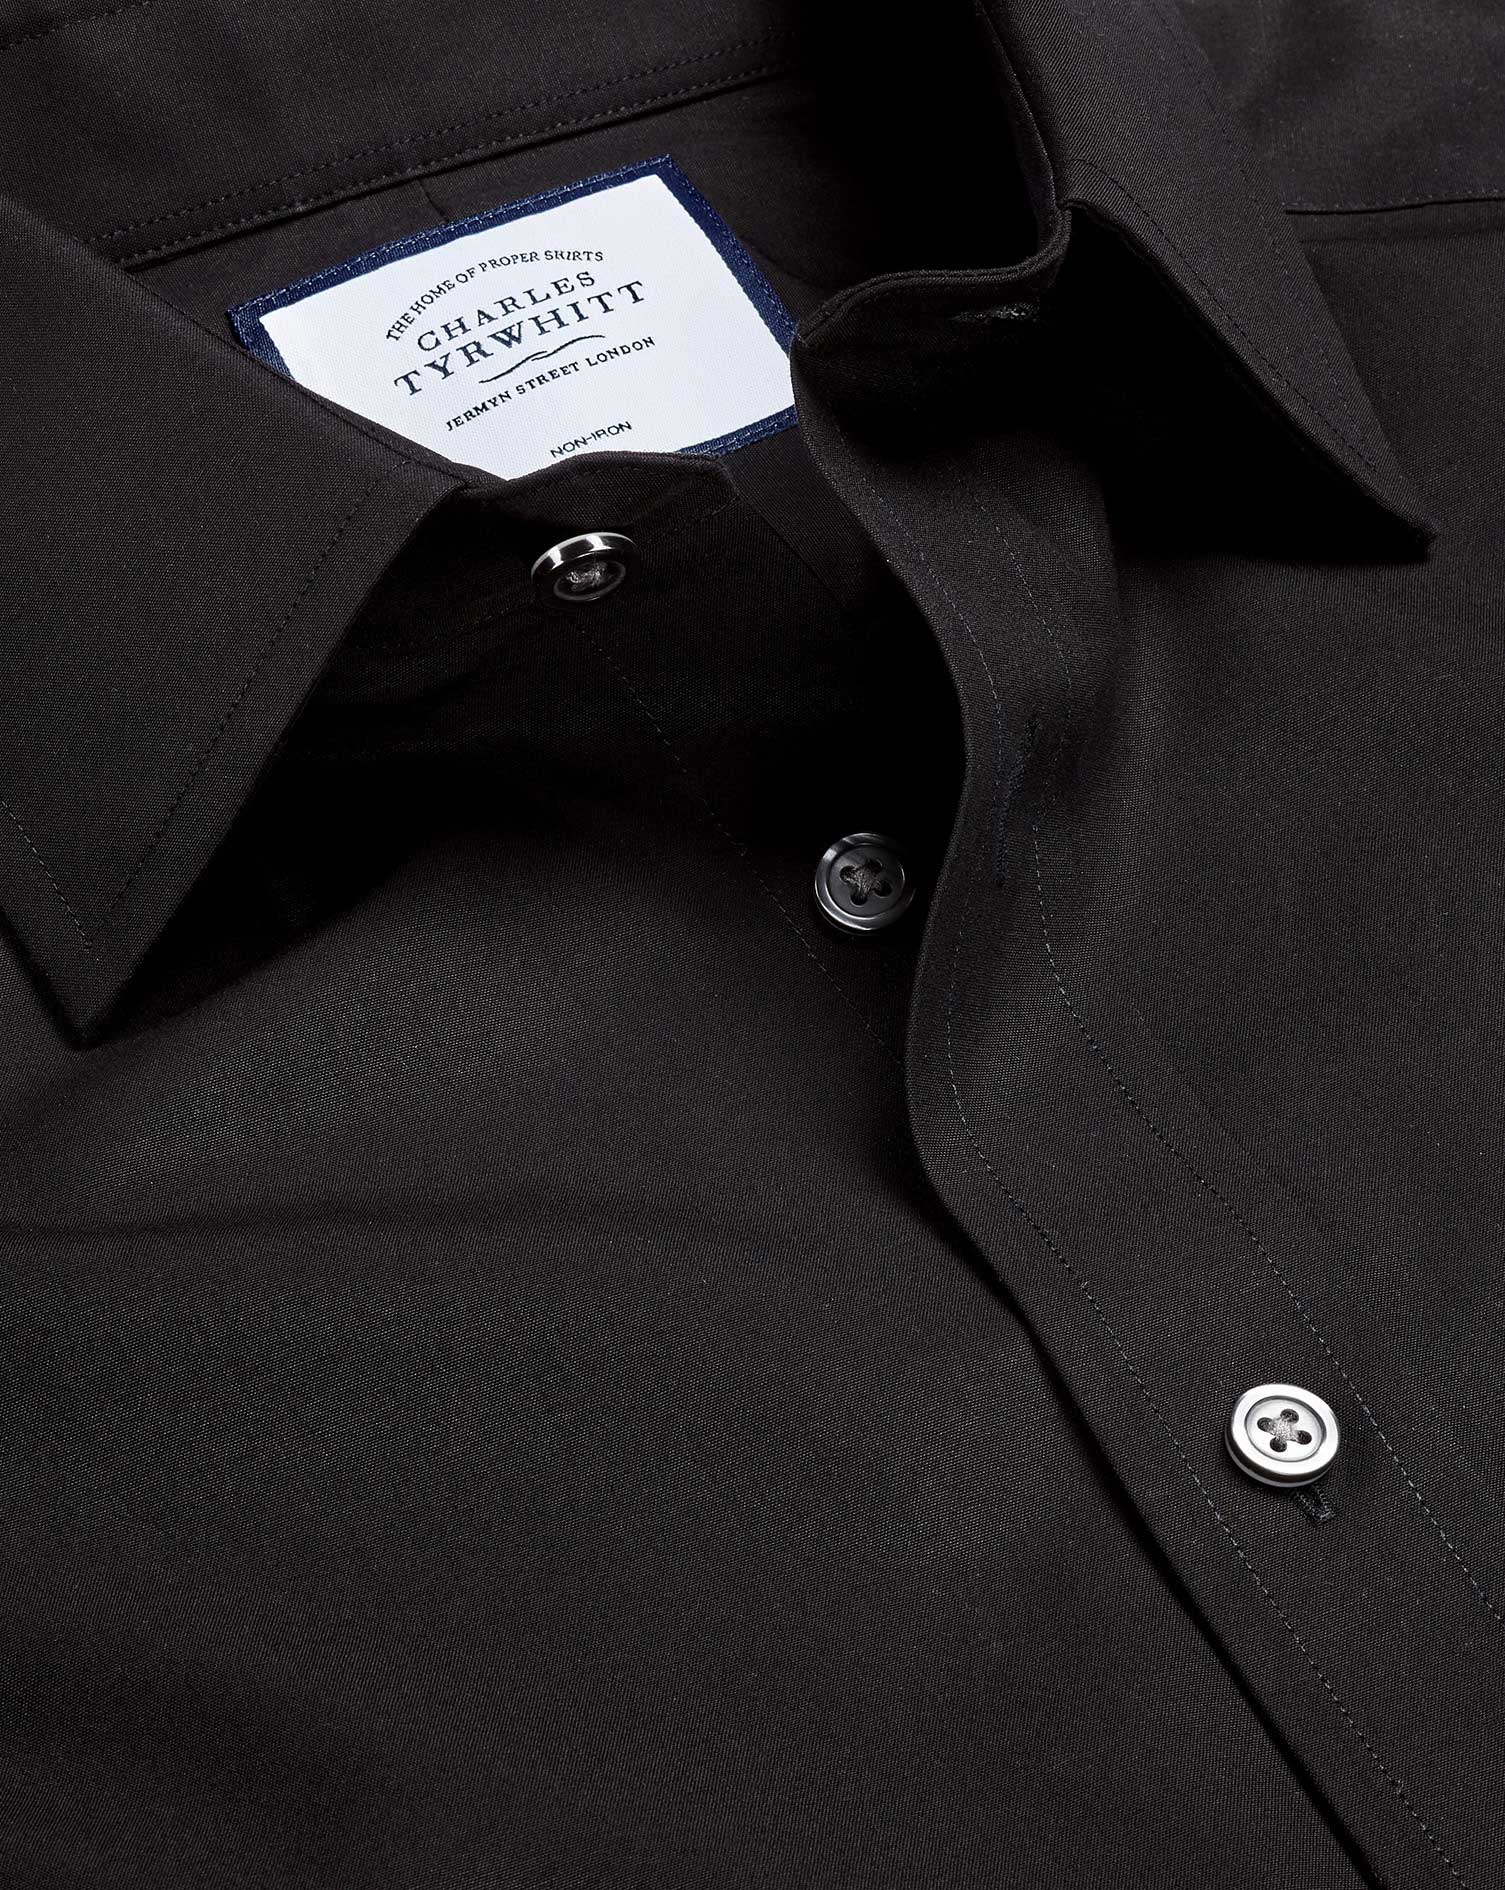 Men's Charles Tyrwhitt Non-Iron Poplin Dress Shirt - Black French Cuff Size Large Cotton
